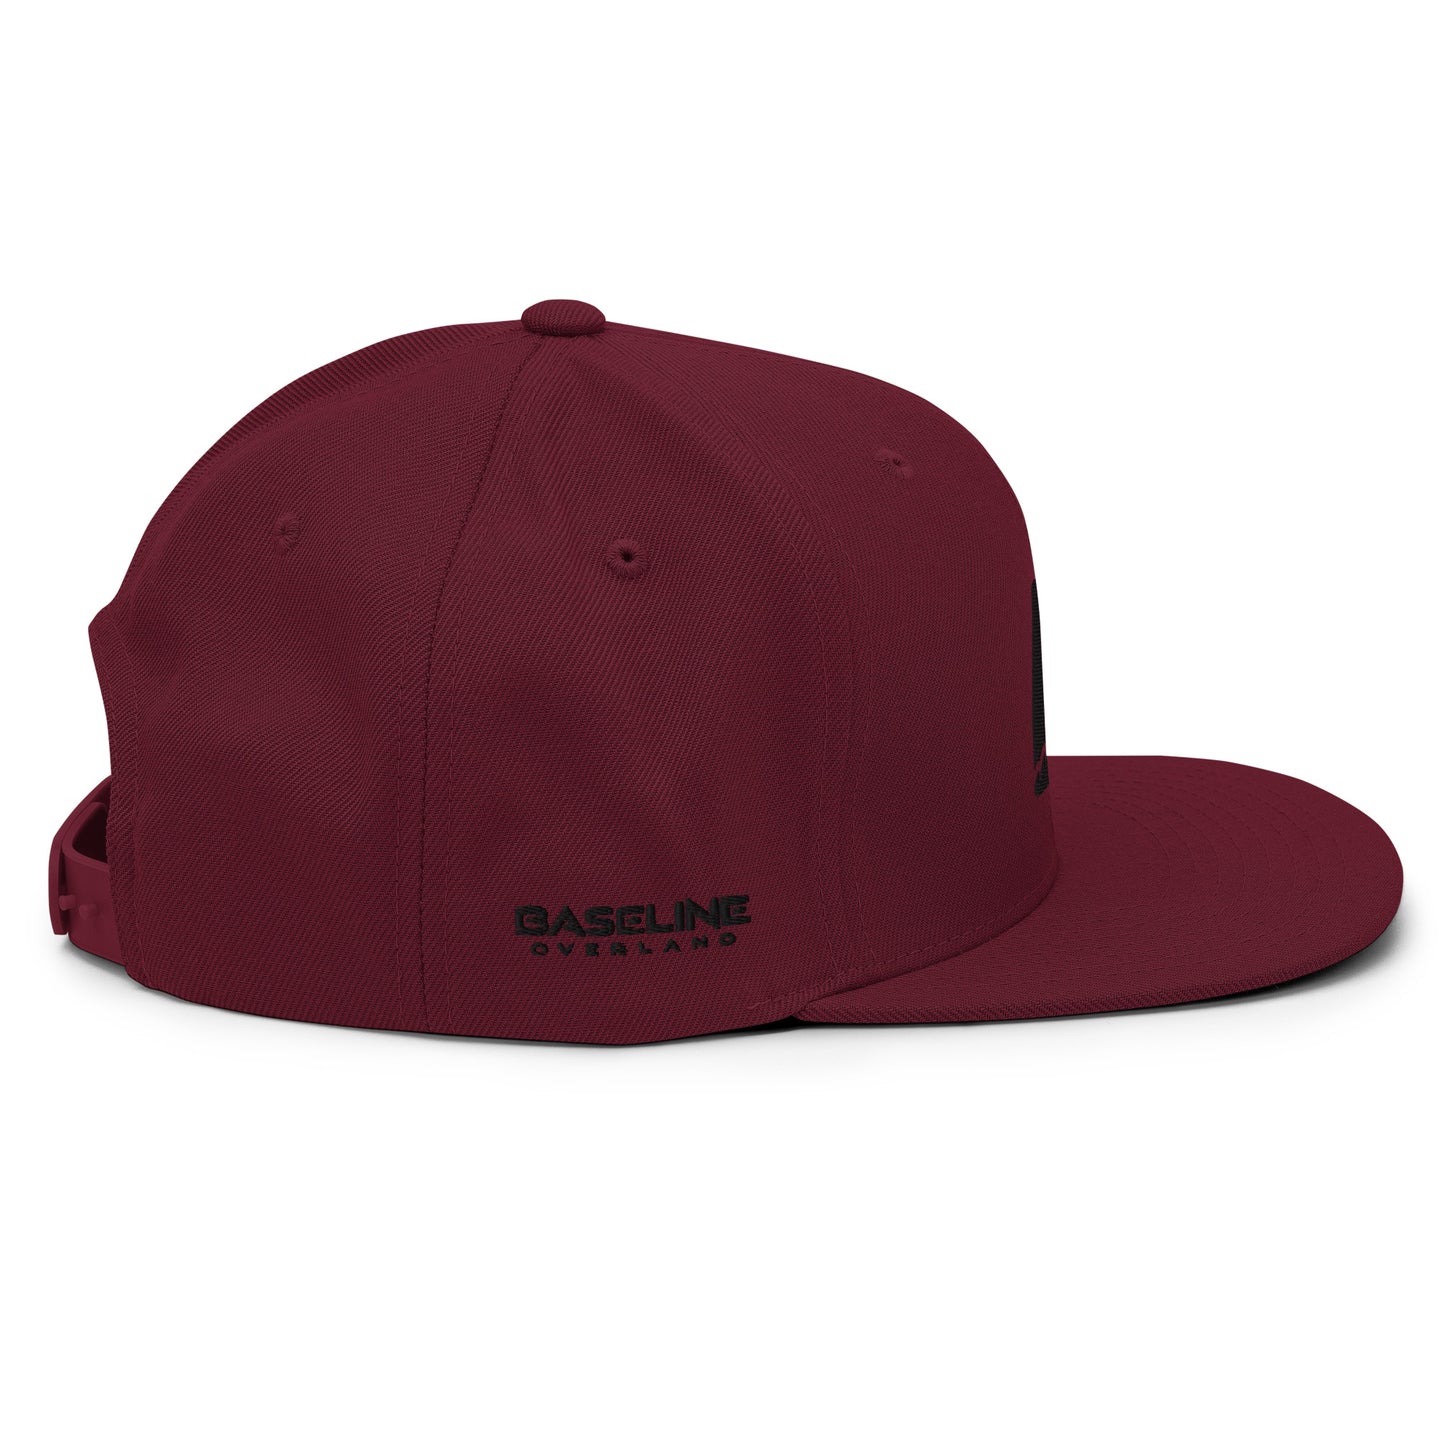 Baseline Overland "B" Snapback Hat